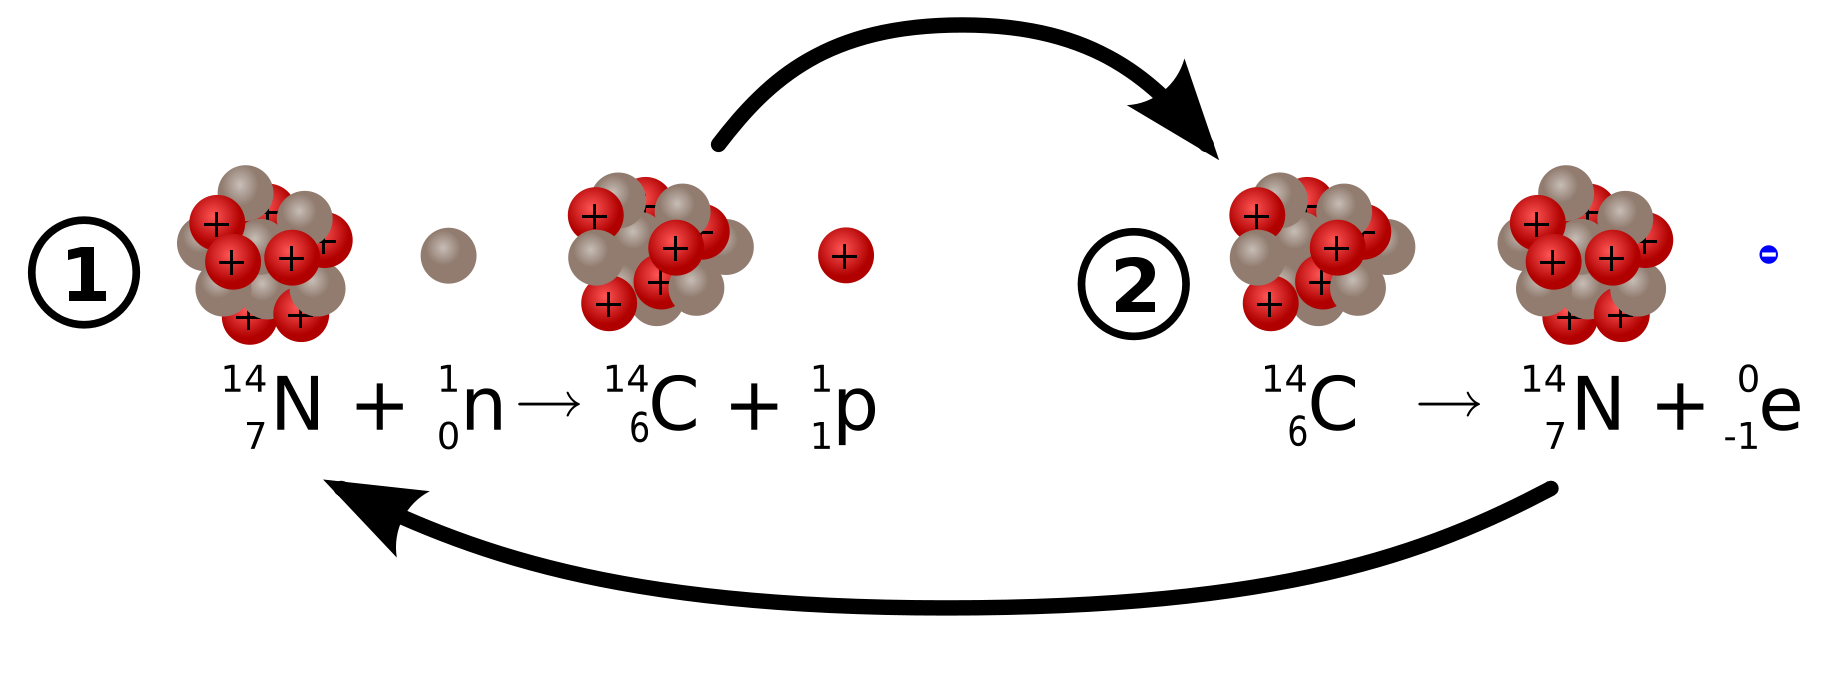 Бета распад углерода. Схема распада углерода 14. Схемы радиоактивного распада углерода 14. Изотоп углерода радиоактивный распад.